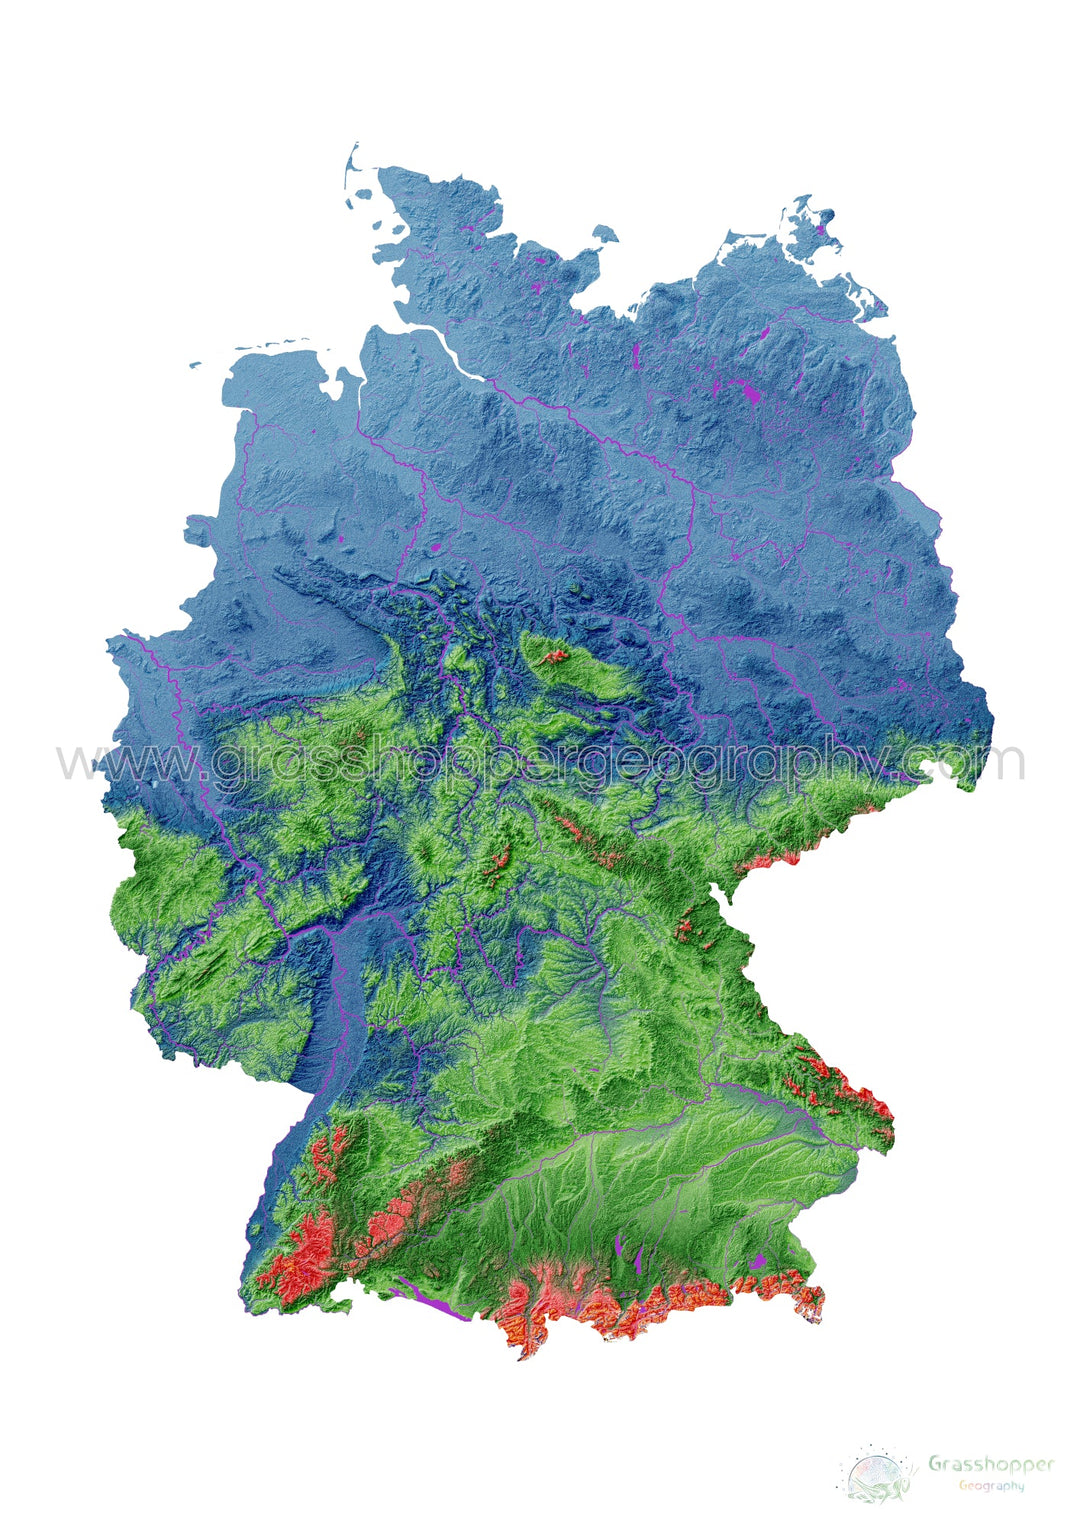 Germany - Elevation map, white - Fine Art Print